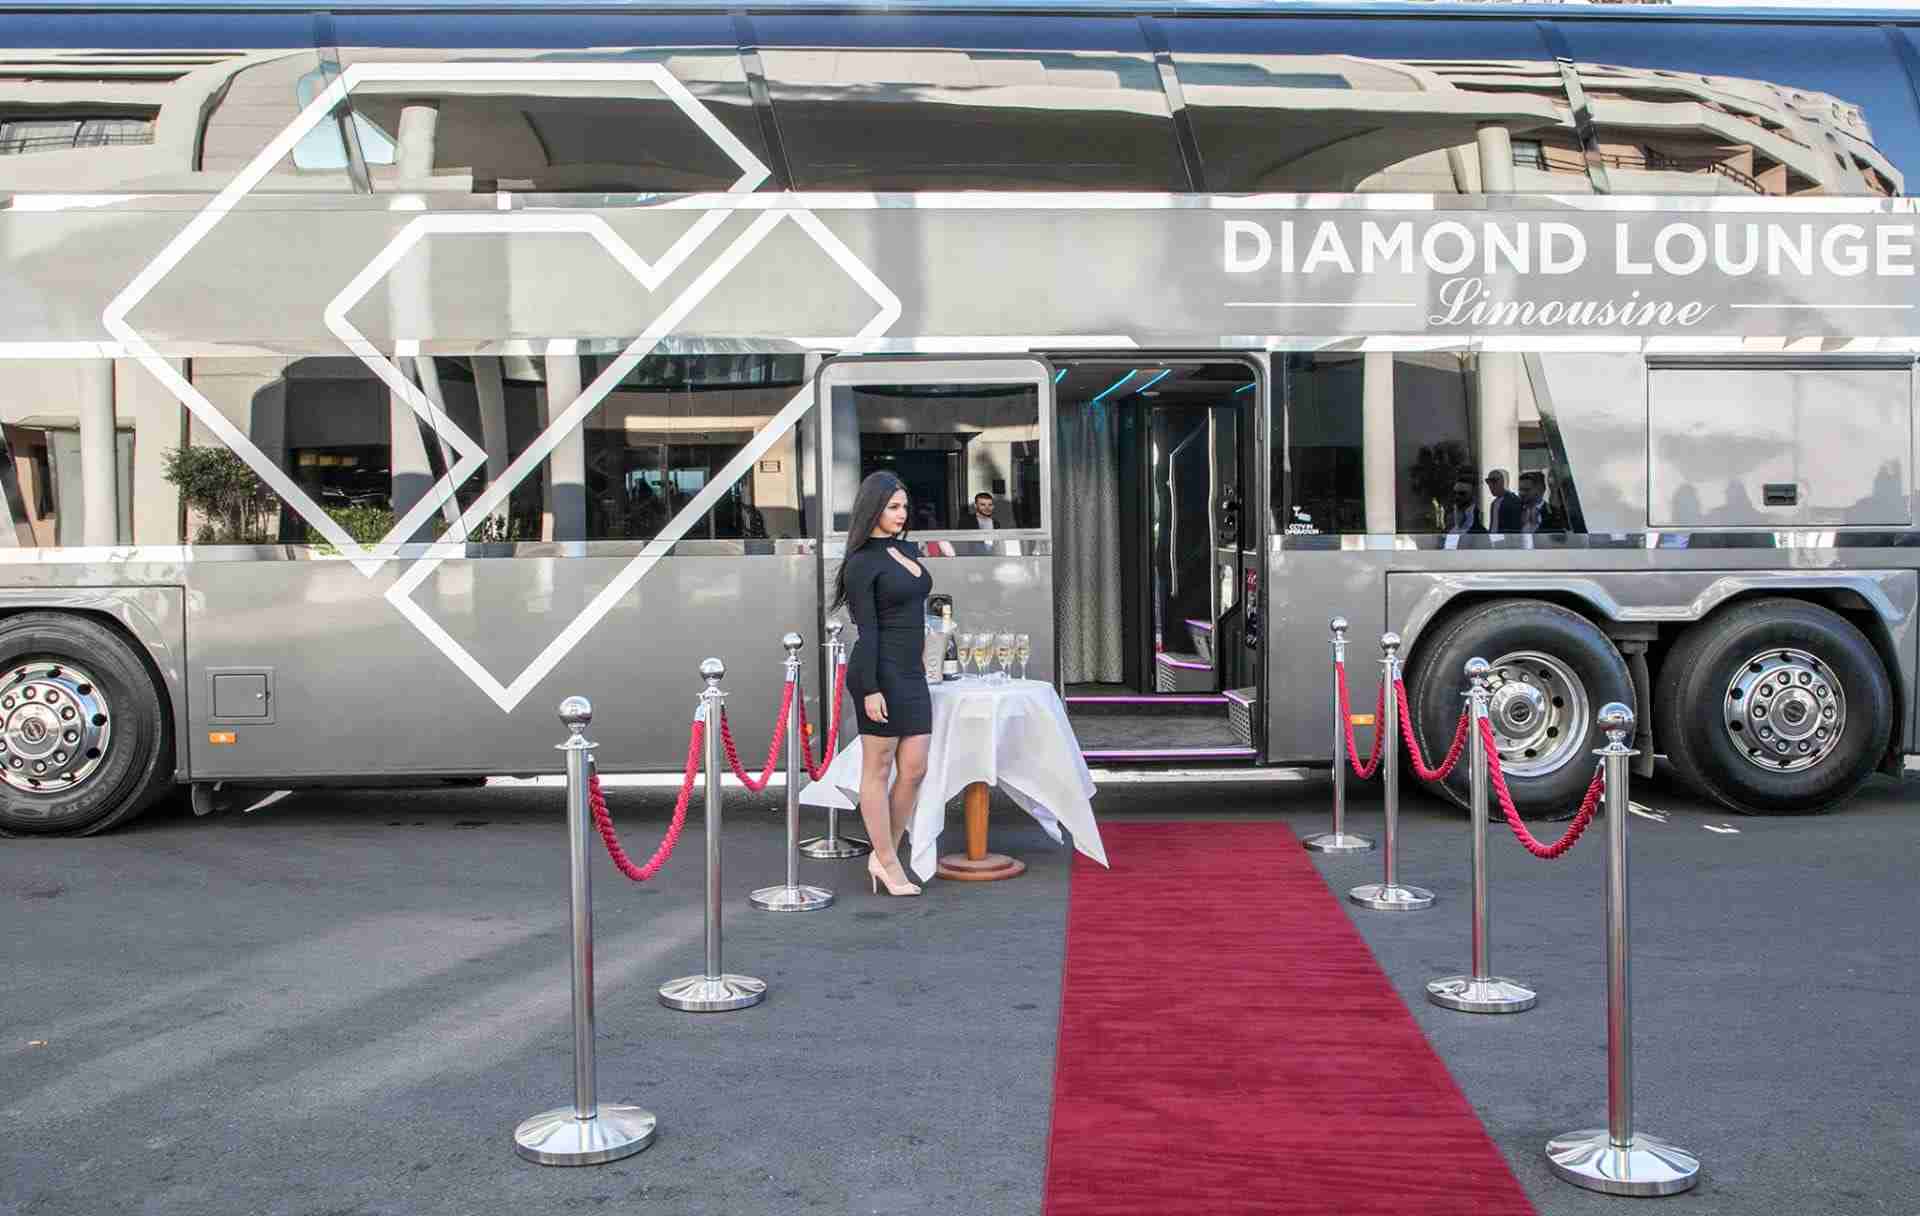 Diamond Lounge Limousine by Garden of Eden Ltd - Chauffeur Service